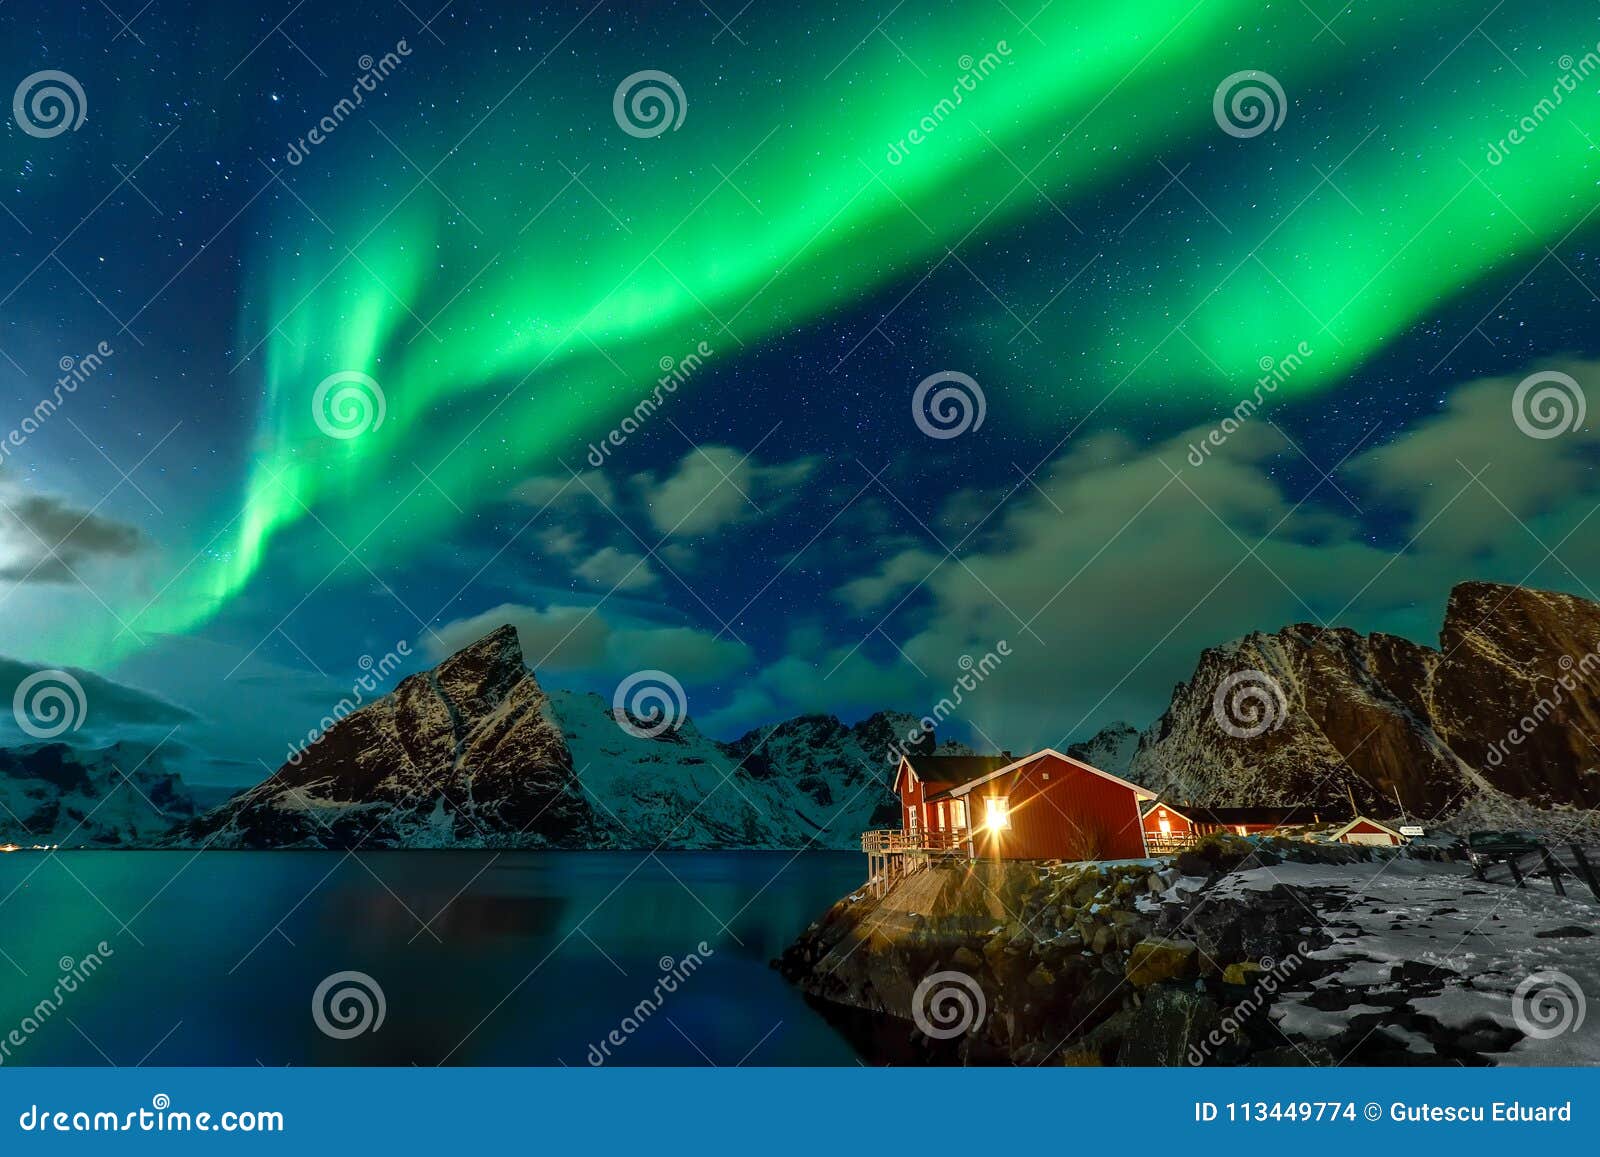 aurora borealis in lofoten archipelago, norway in the winter time